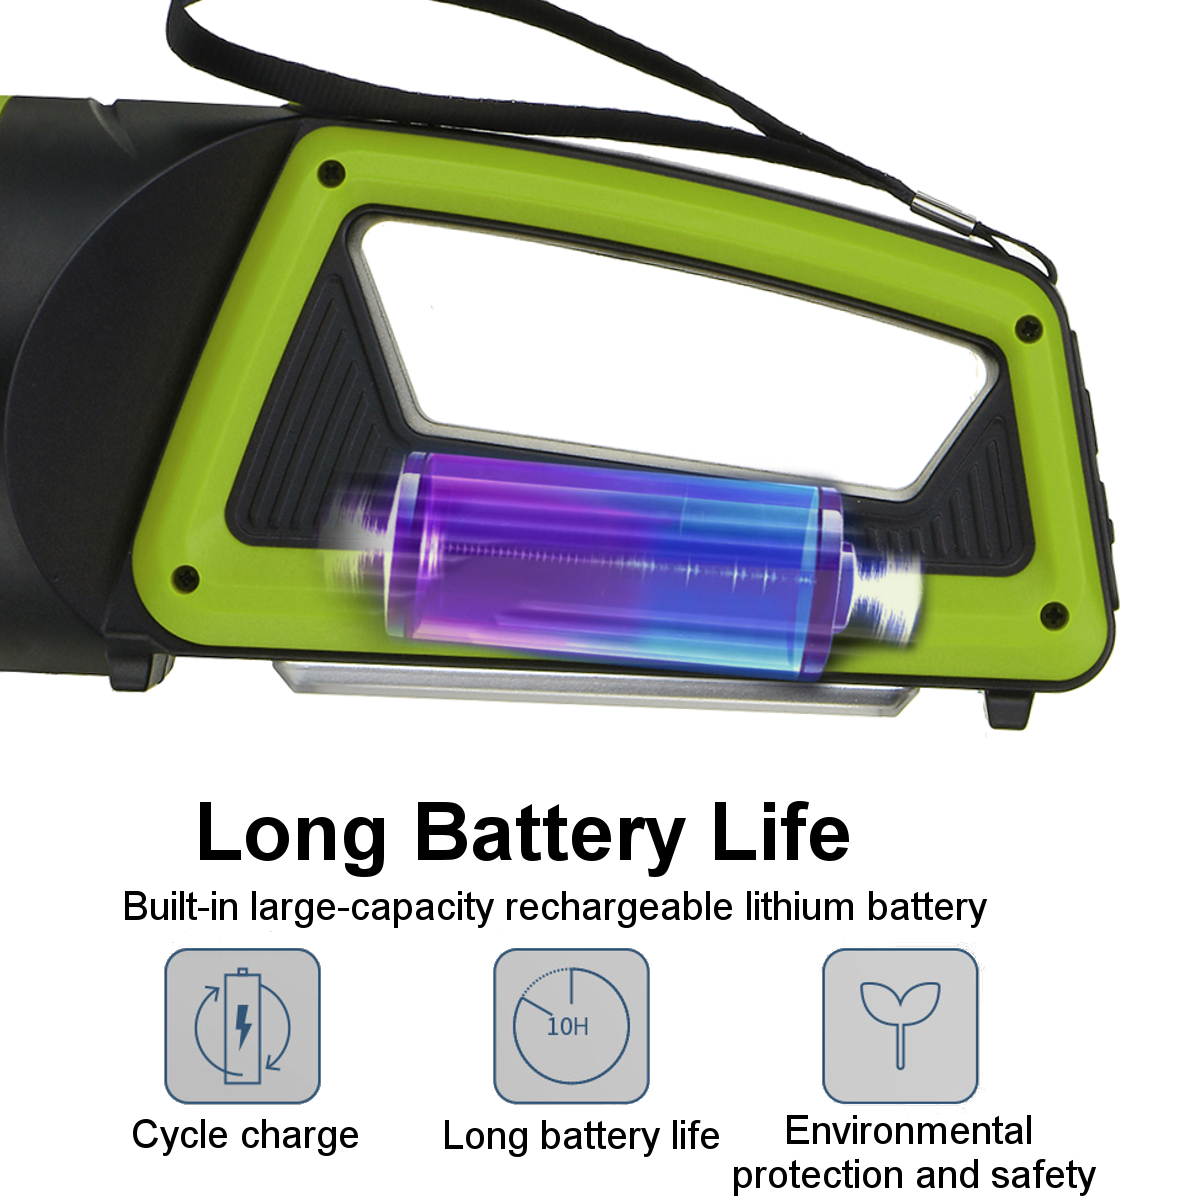 L2-LEDCOB-Searchlight-Super-Bright-7-Modes-USB-Rechargeable-Handheld-Flashlight-Camping-Fishing-1887927-7